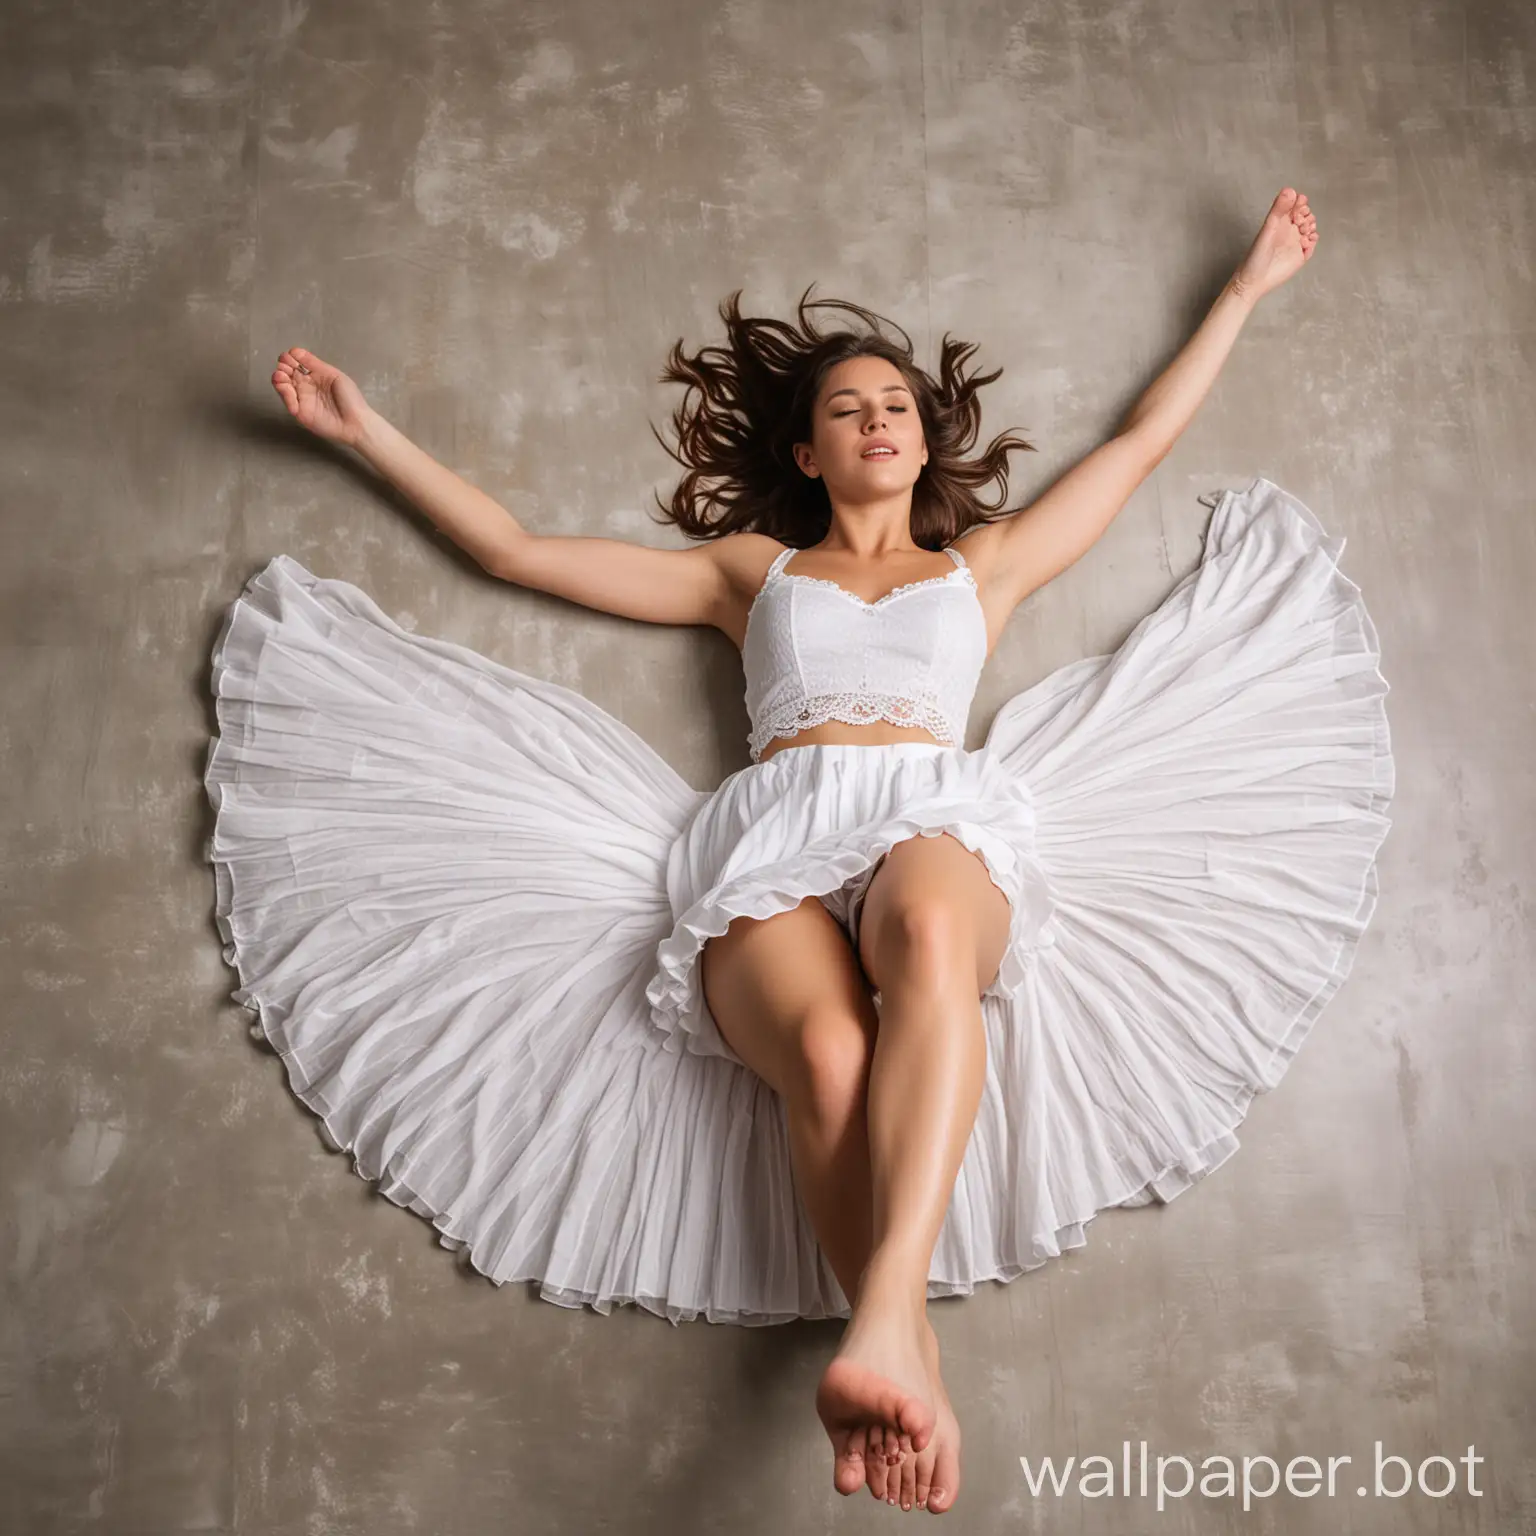 Barefoot-Girl-in-White-Skirt-Poses-Playfully-in-Photoshoot